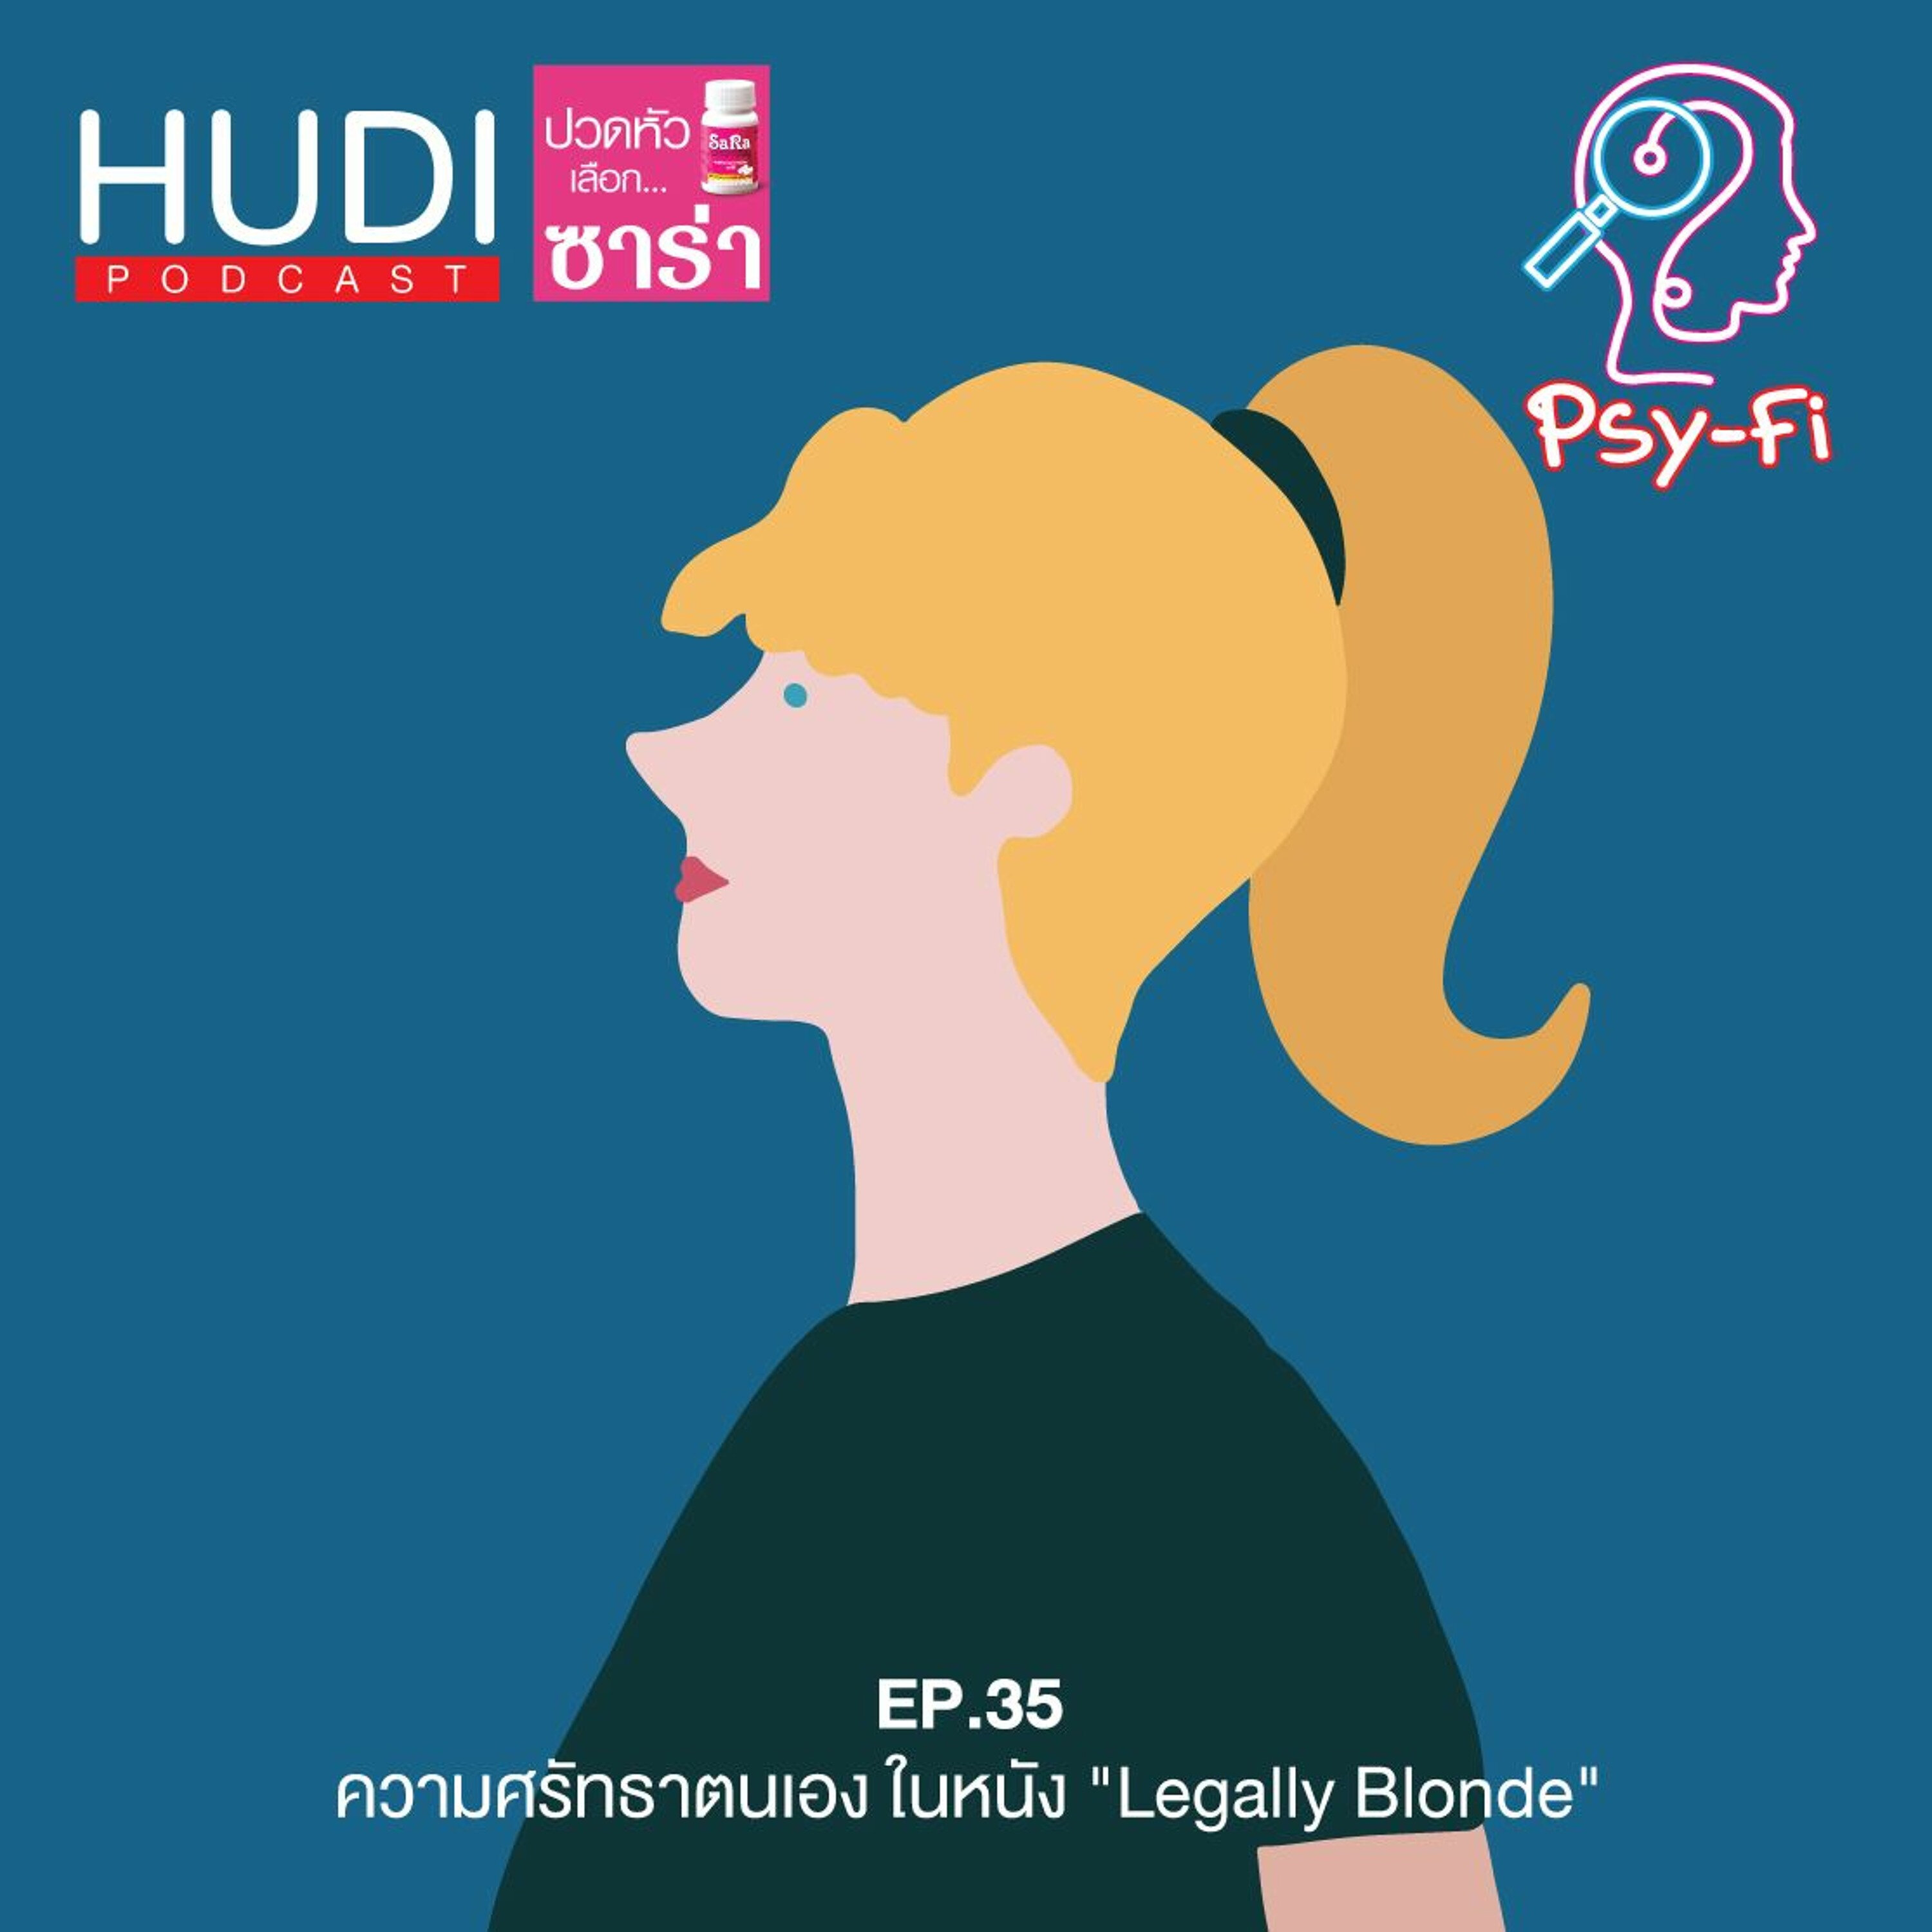 Psy-Fi Ep.35 - ความศรัทธาตนเอง ในหนัง ”Legally Blonde”